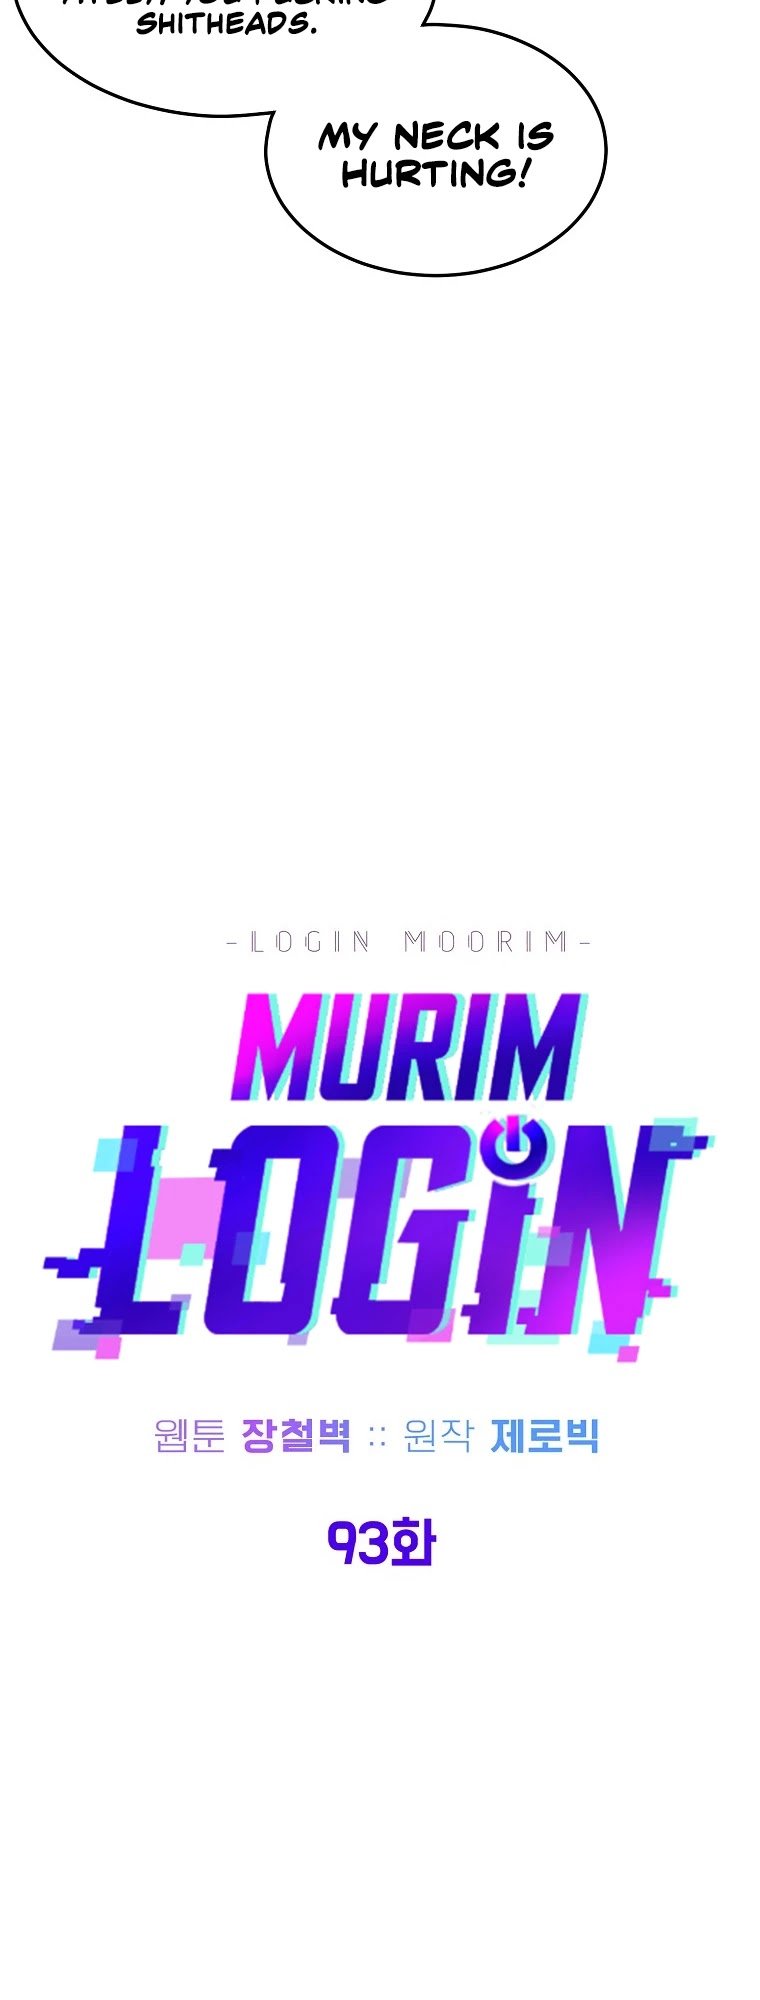 murim login chapter